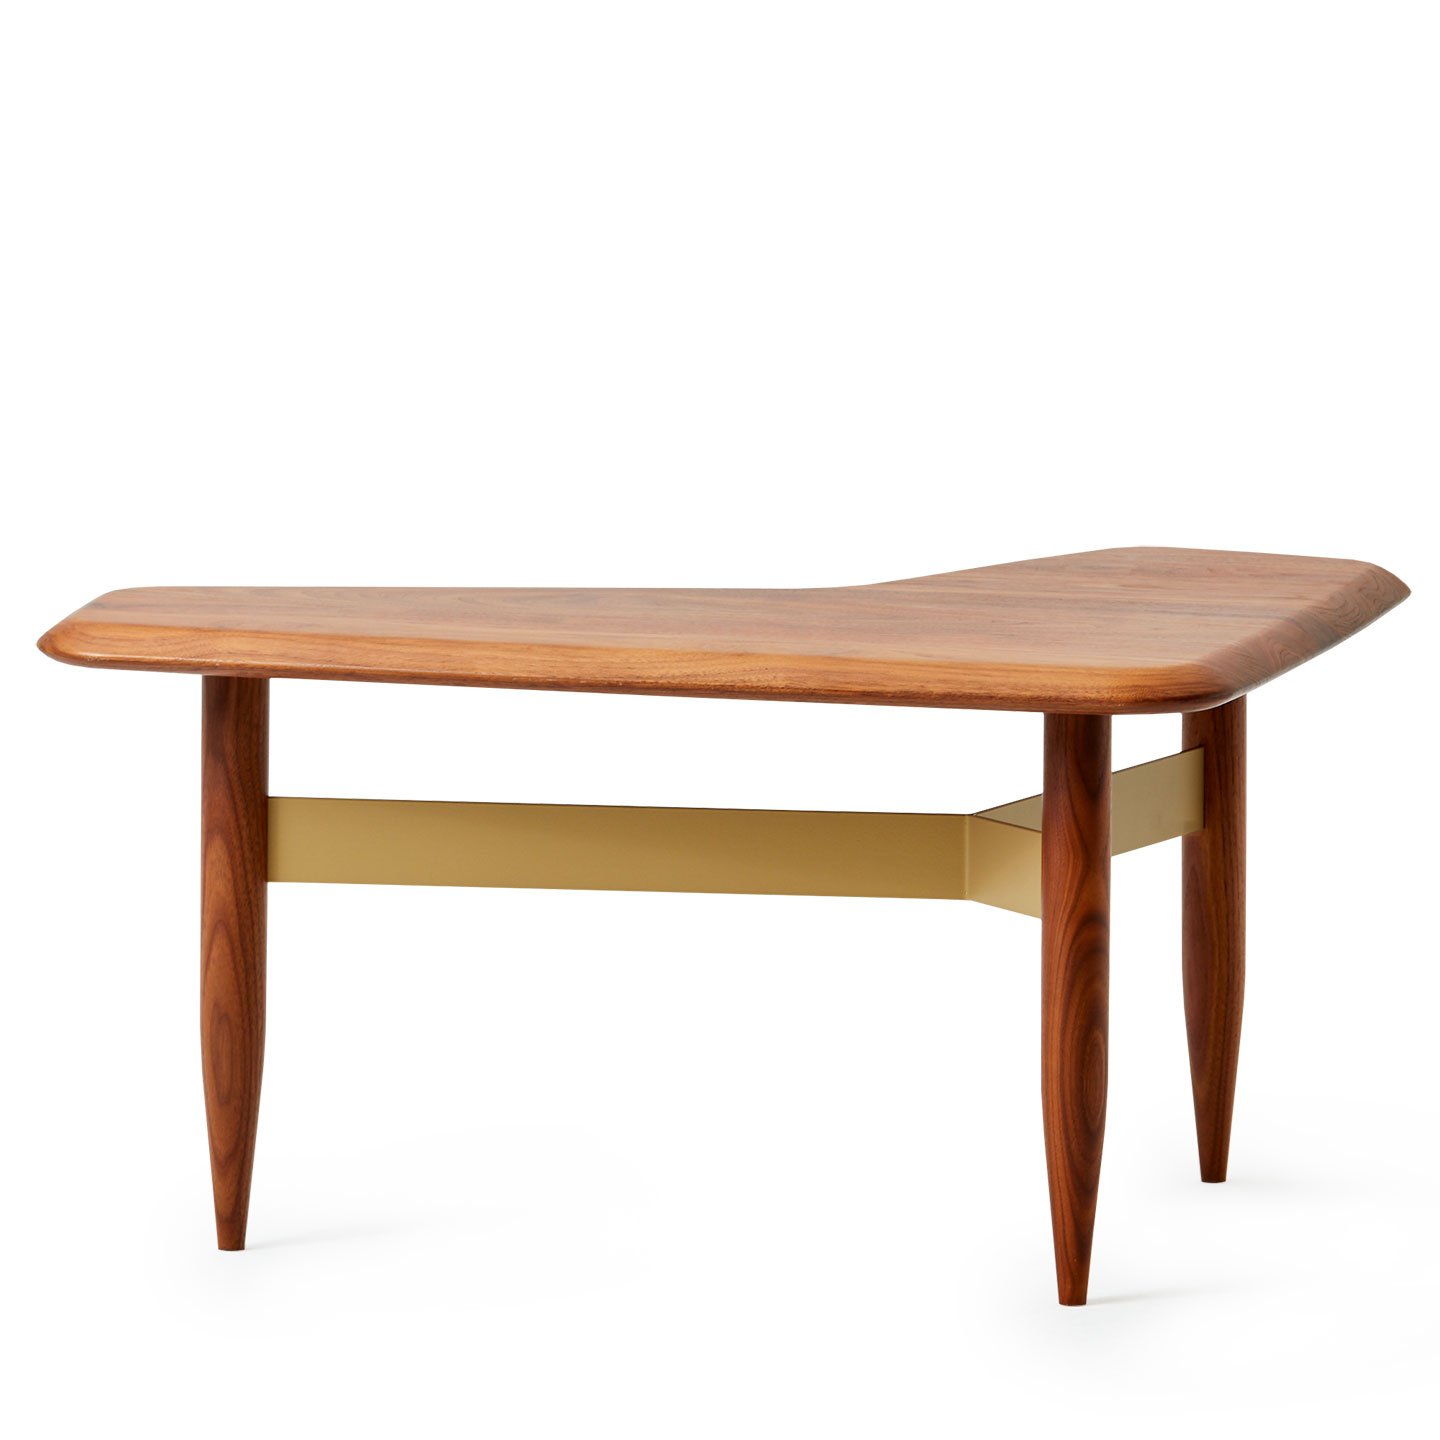 Haworth BuzziNordic Table in walnut 3 legged